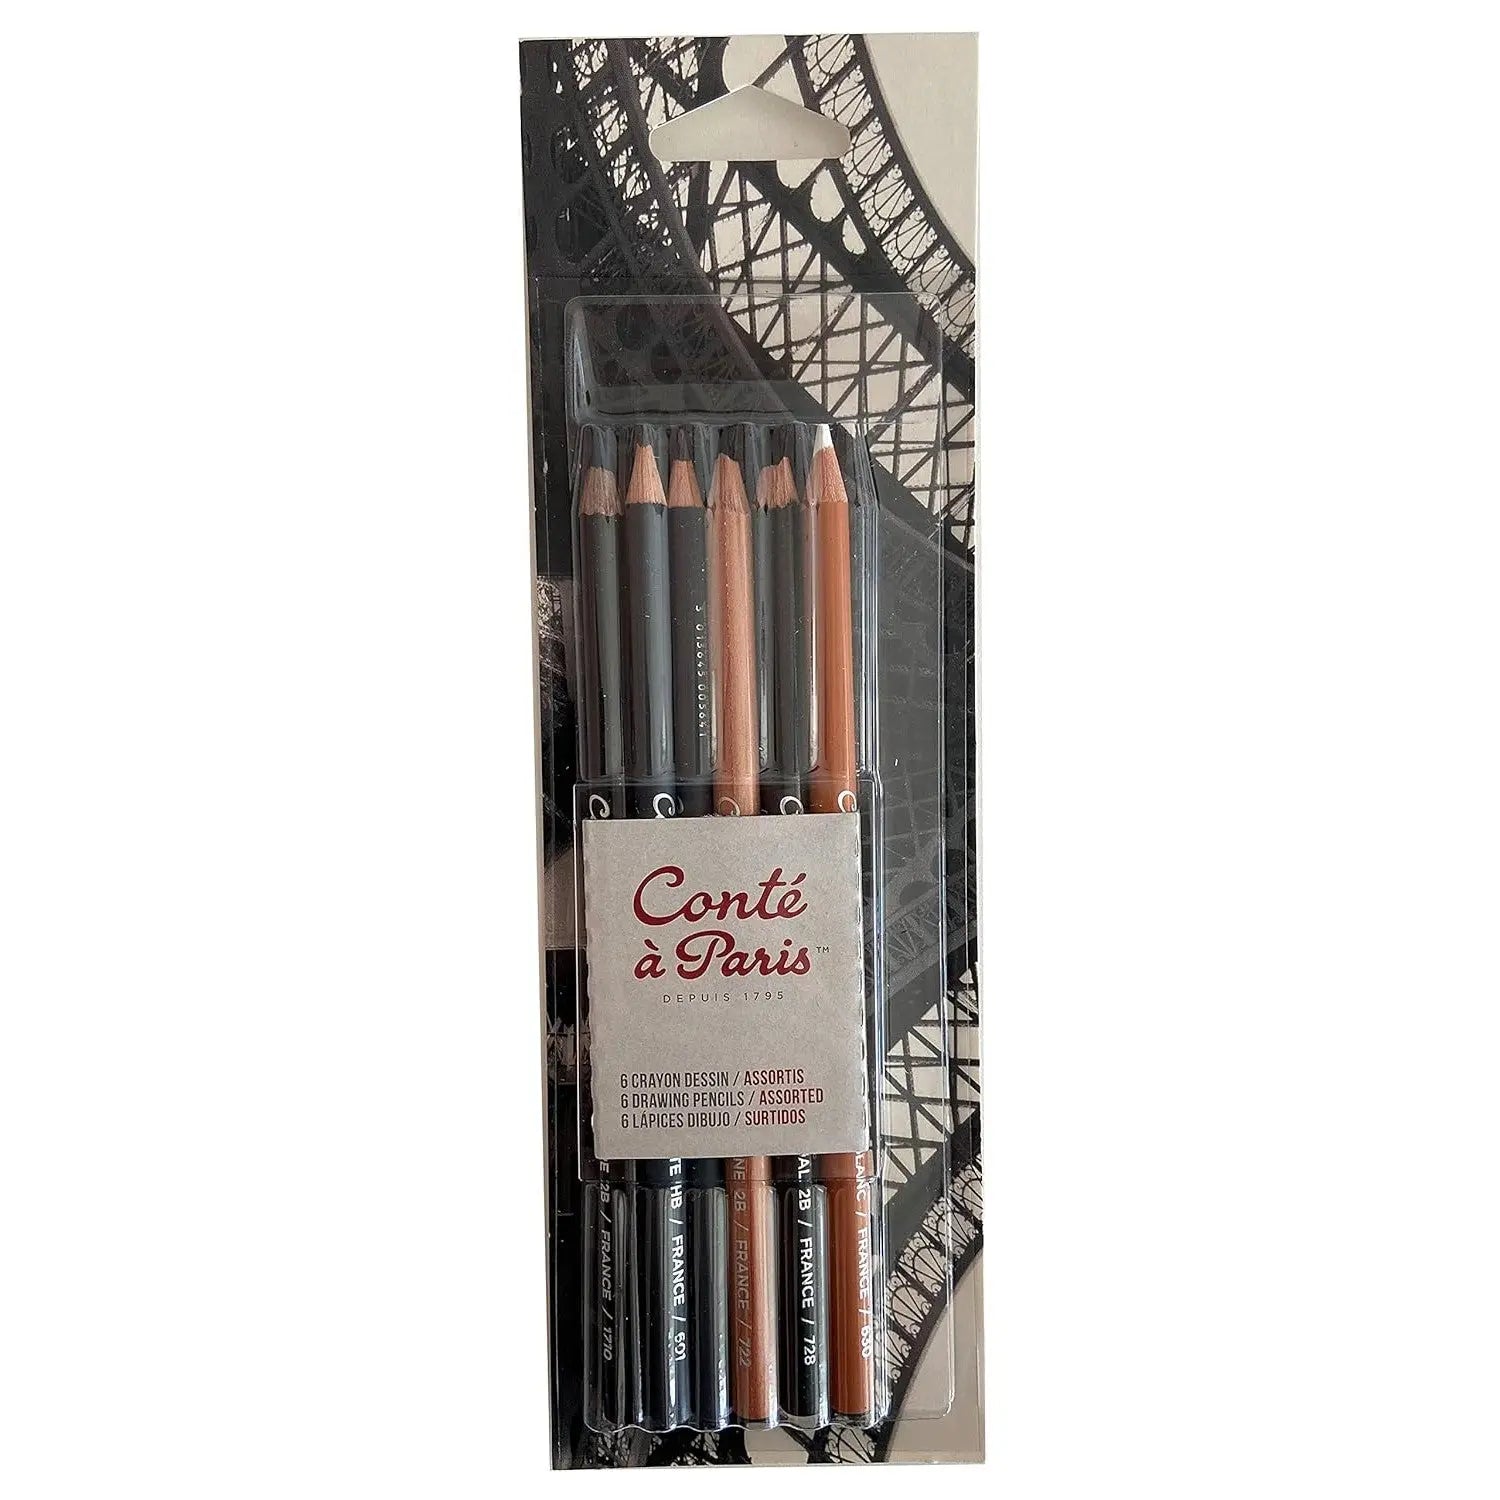 Conte a' Paris Crayon Dessin Assorted Sketching Pencils - Blister Pack of 6 (50105) Conte à Paris